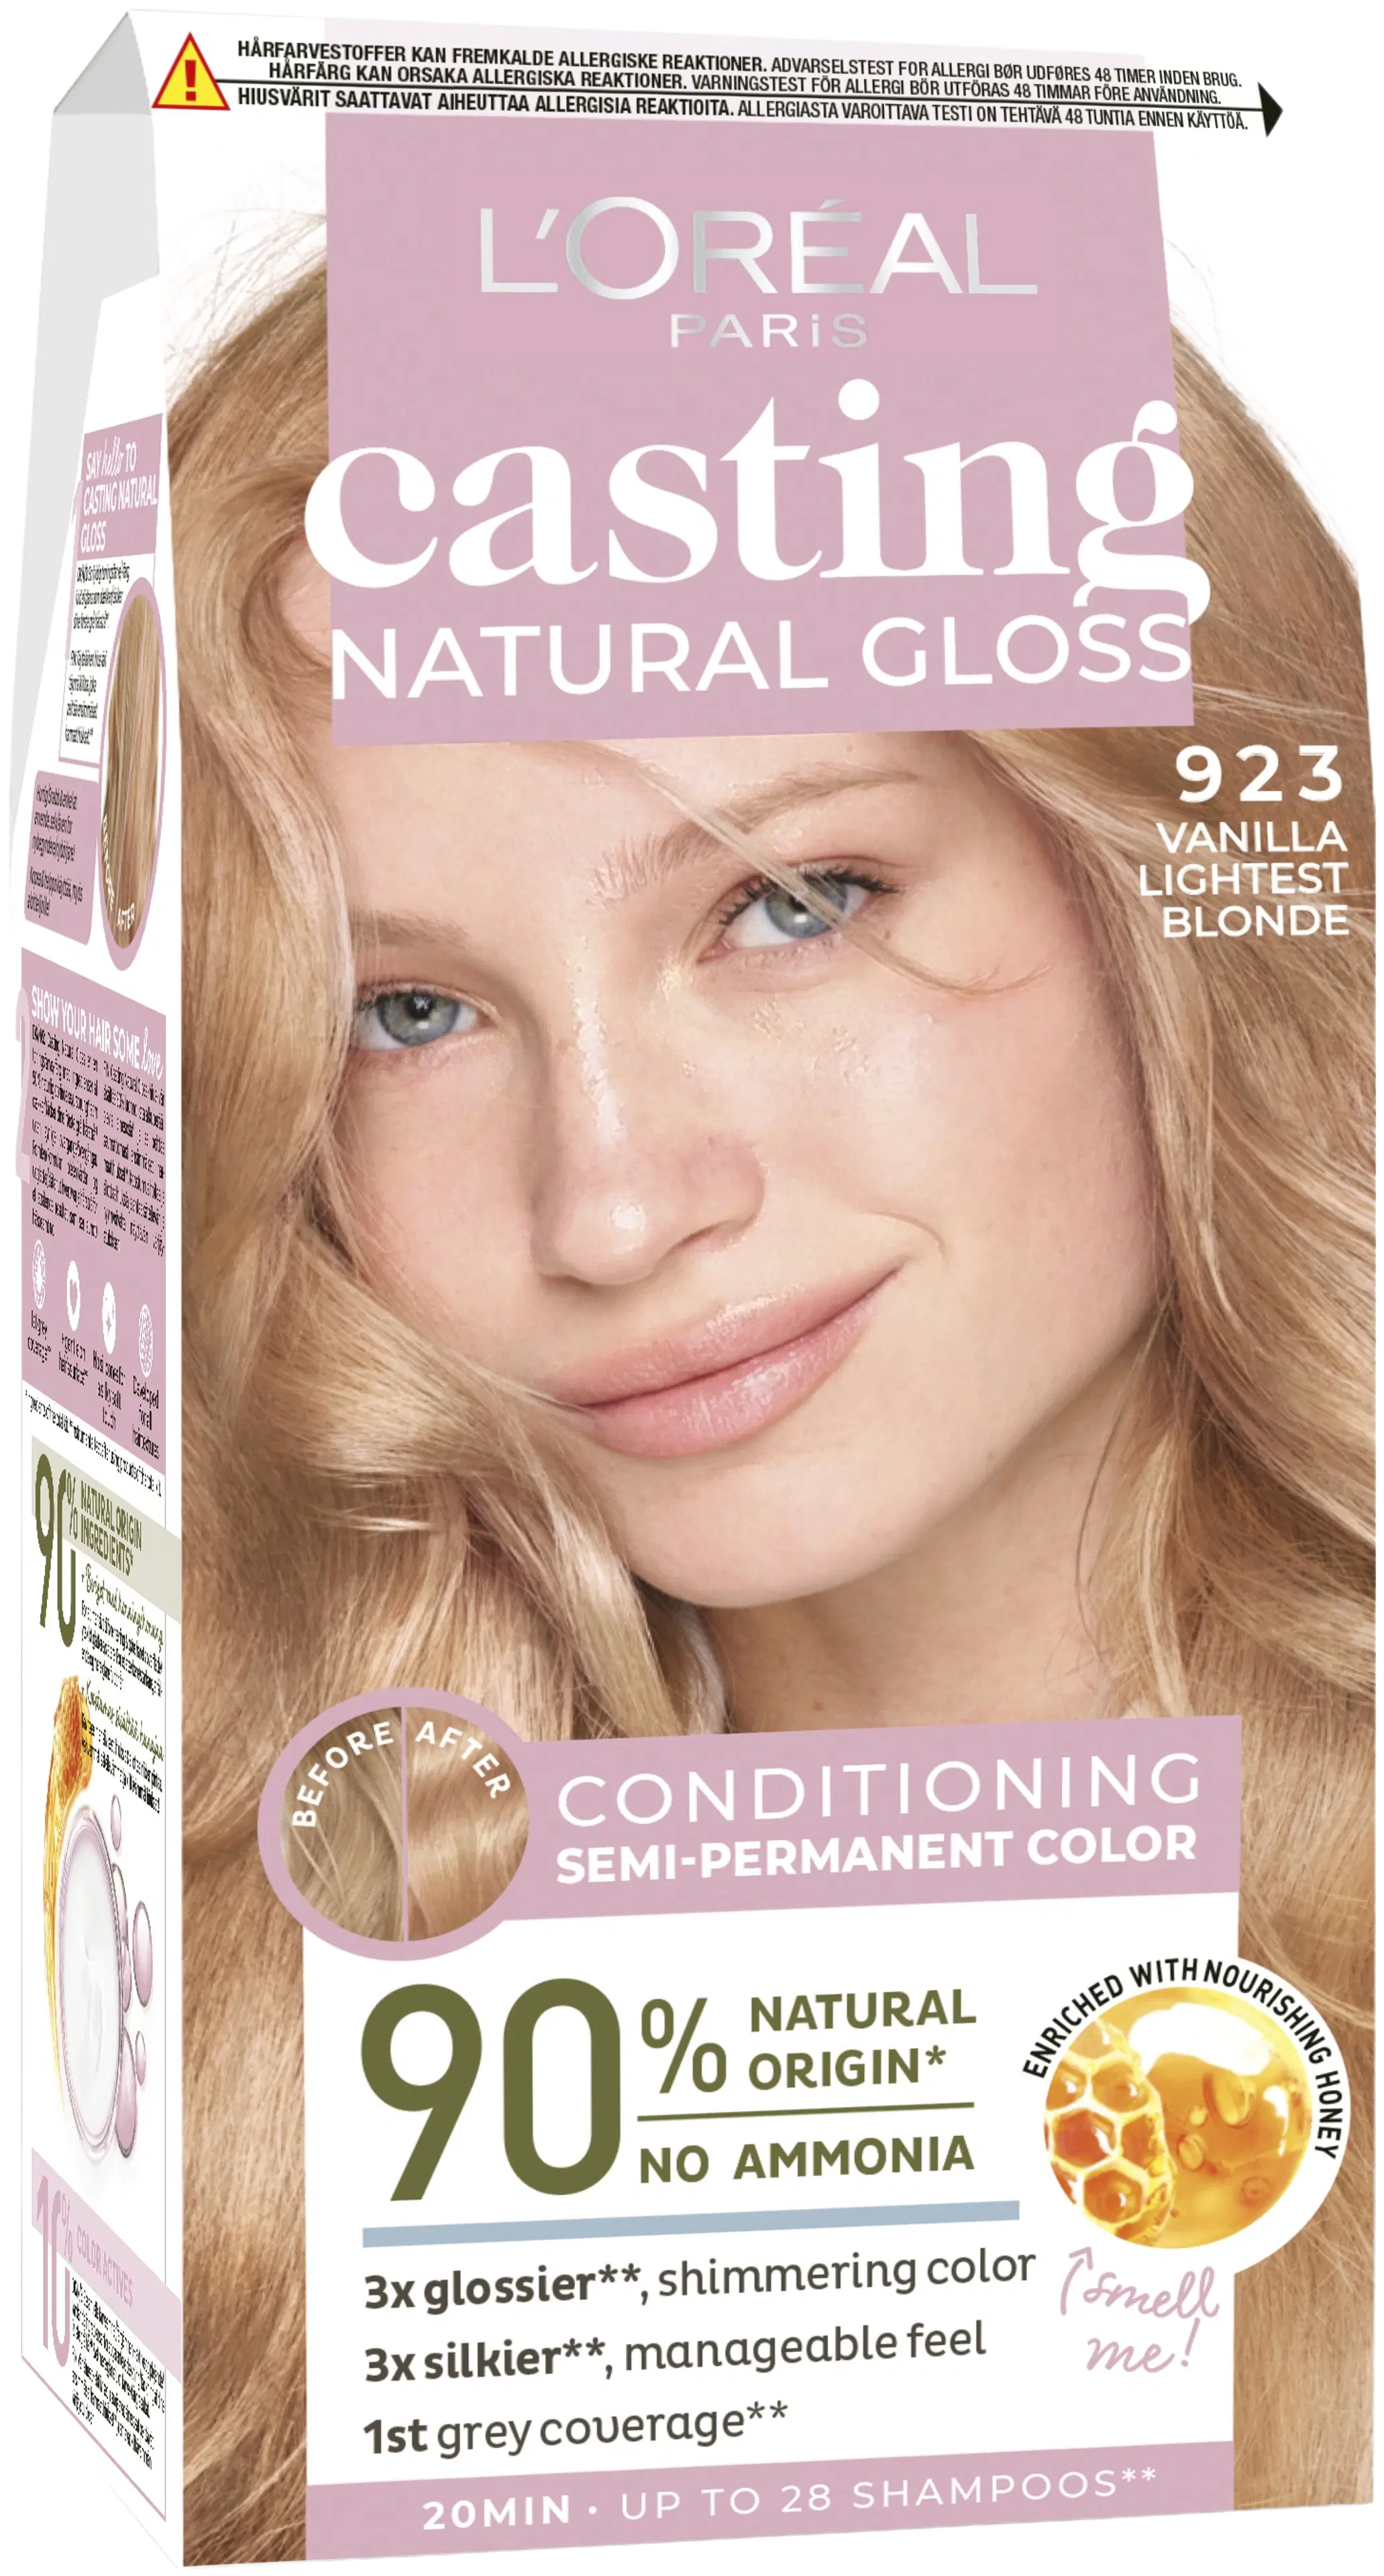 L'Oréal Paris Casting Natural Gloss 823 Light Blonde Vanille kevytväri 1kpl